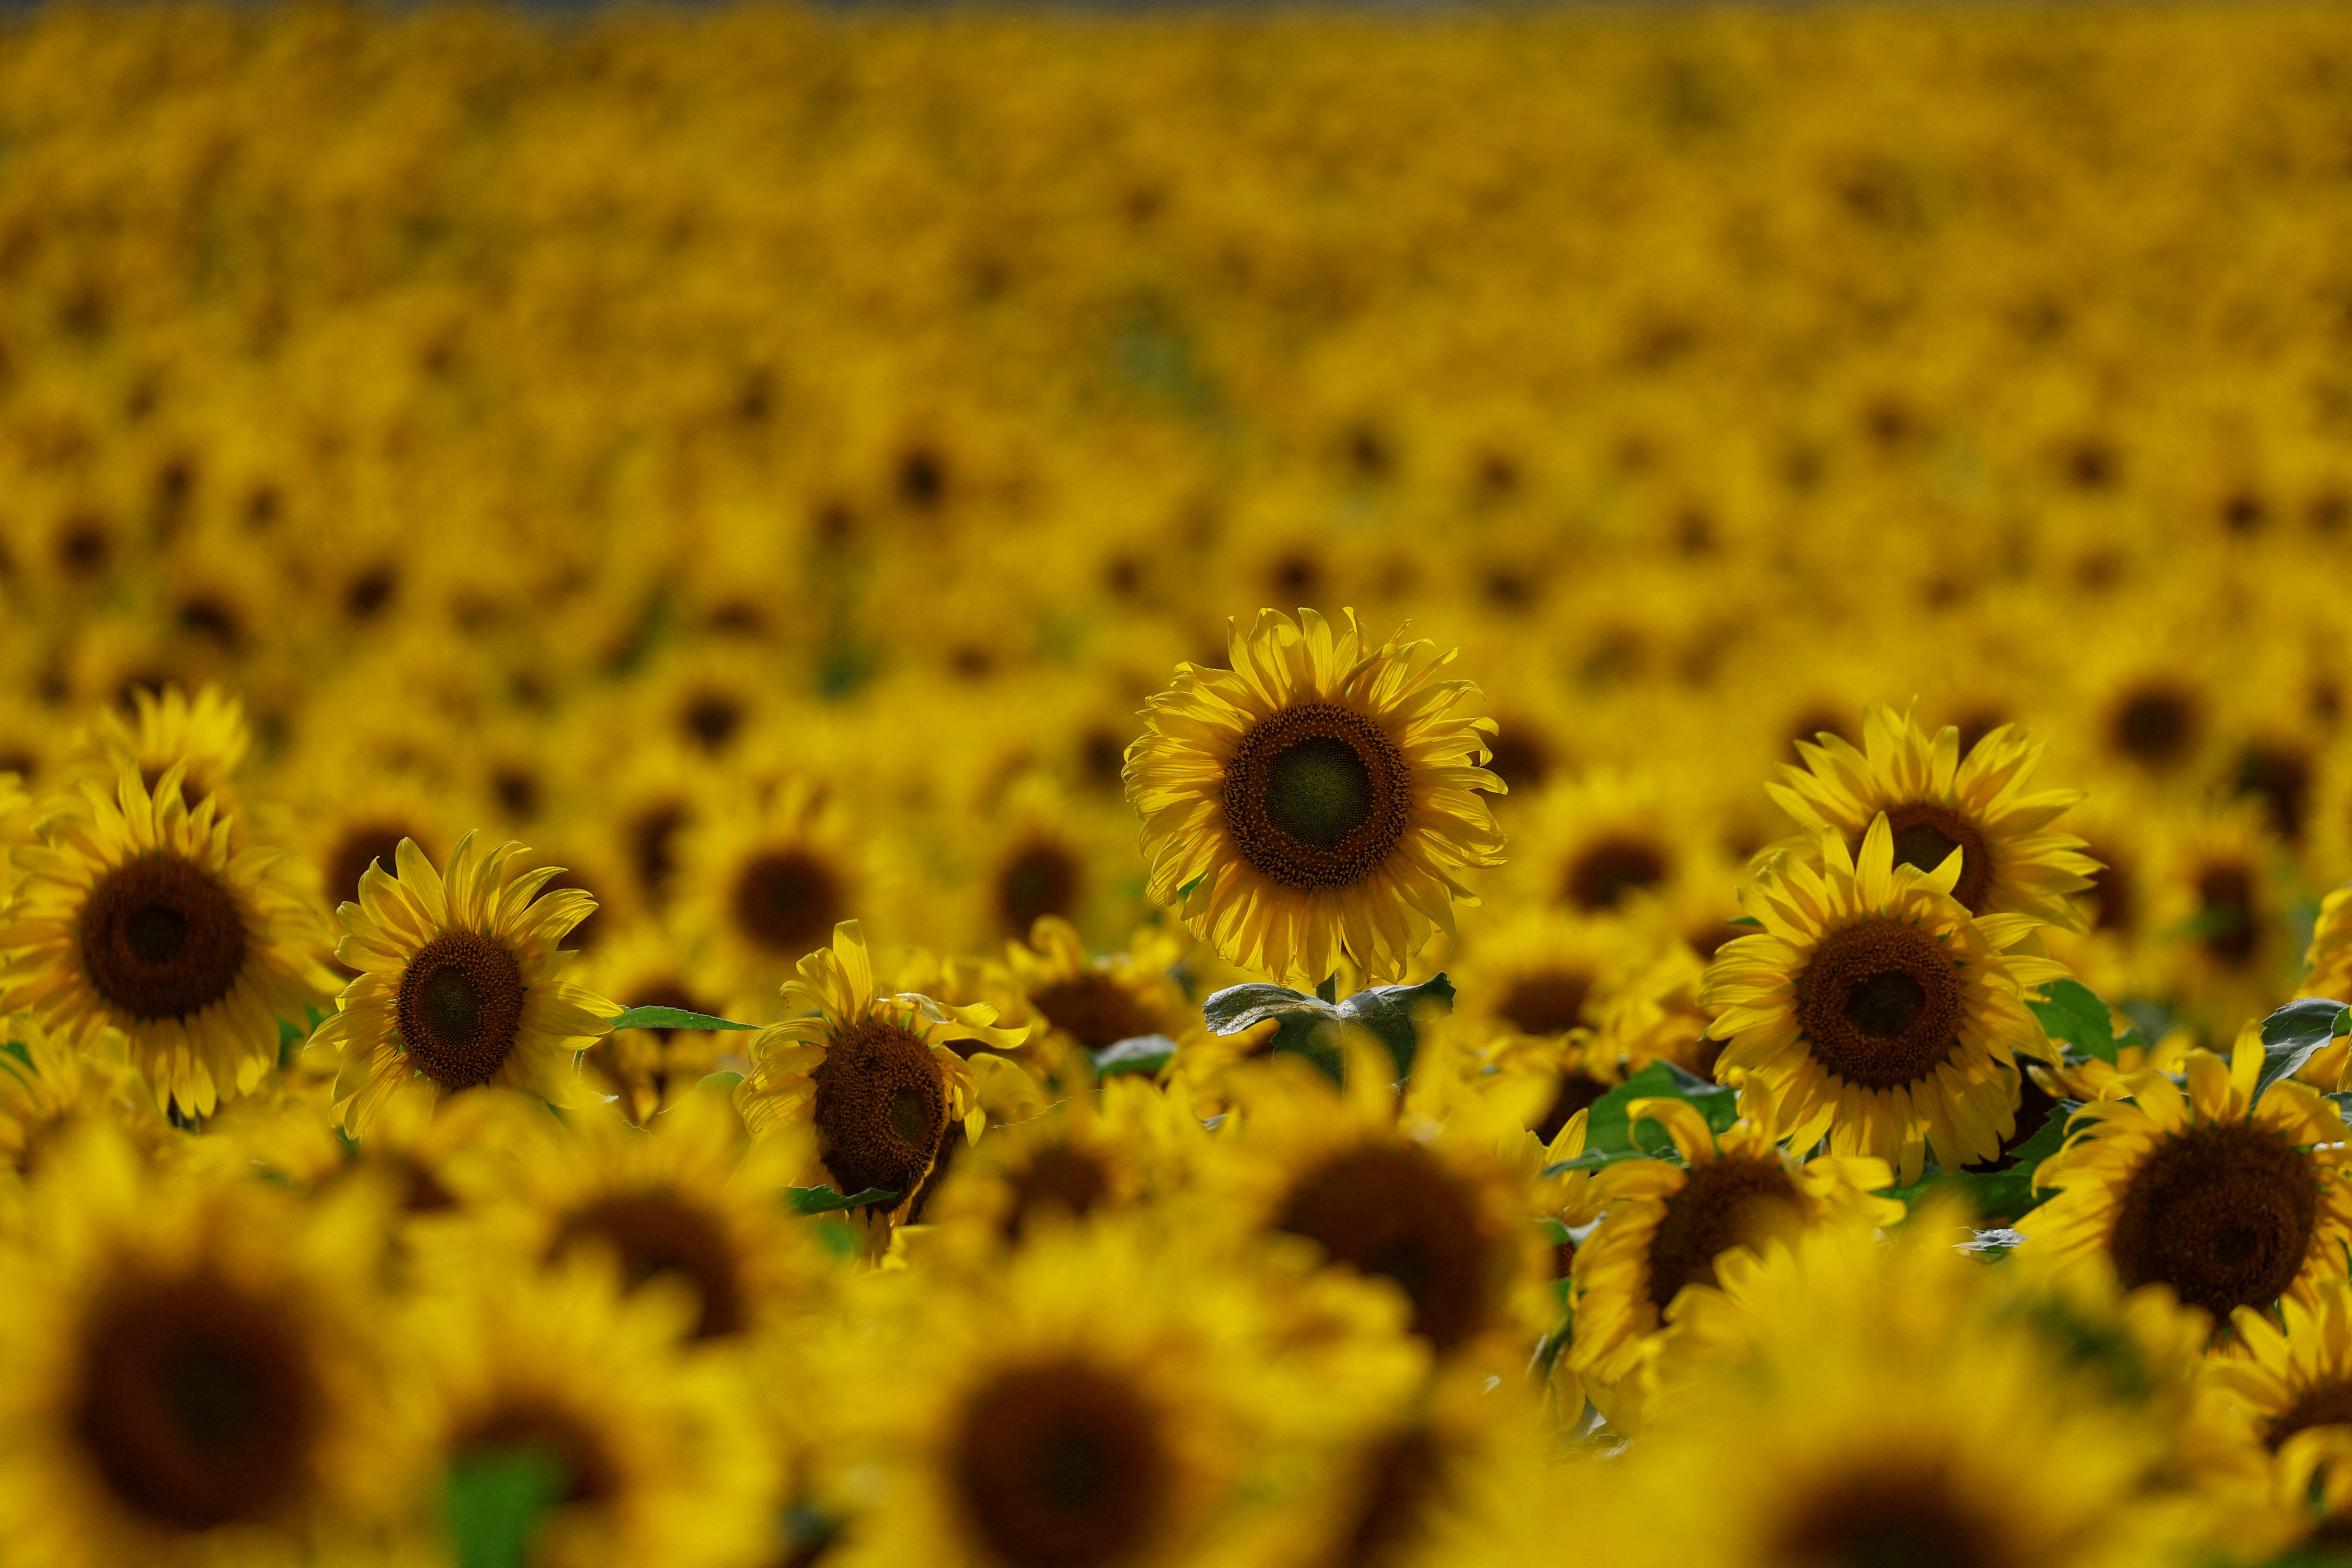 Sunflowers are seen in a field in Chernihiv region